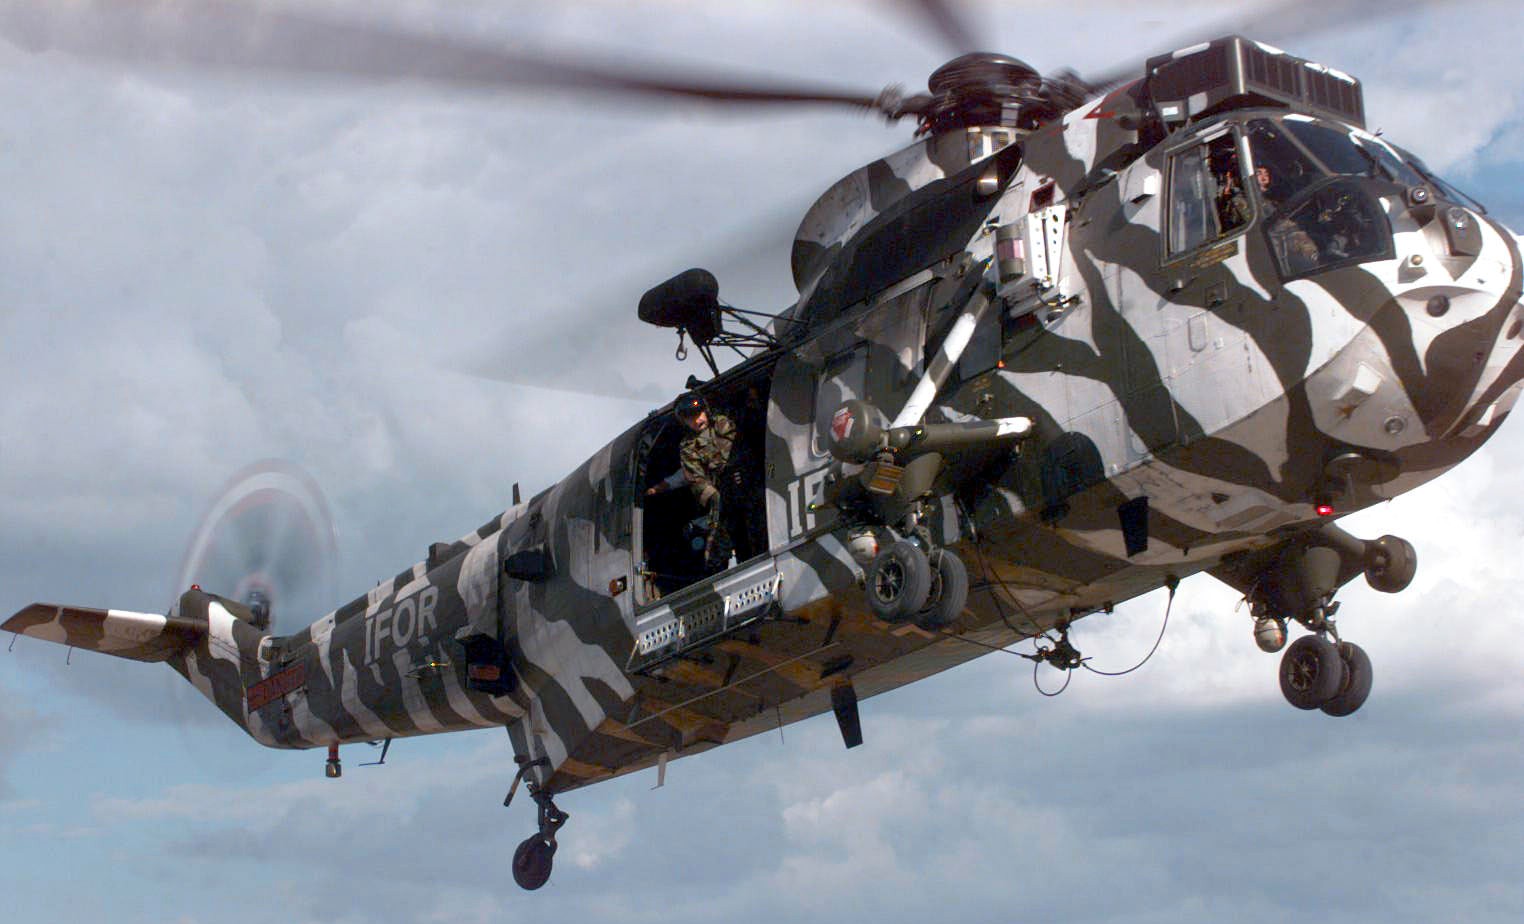 sea king hc.4 helicopter royal navy commando assault marines westland nas squadron rnas 47 ifor kosovo